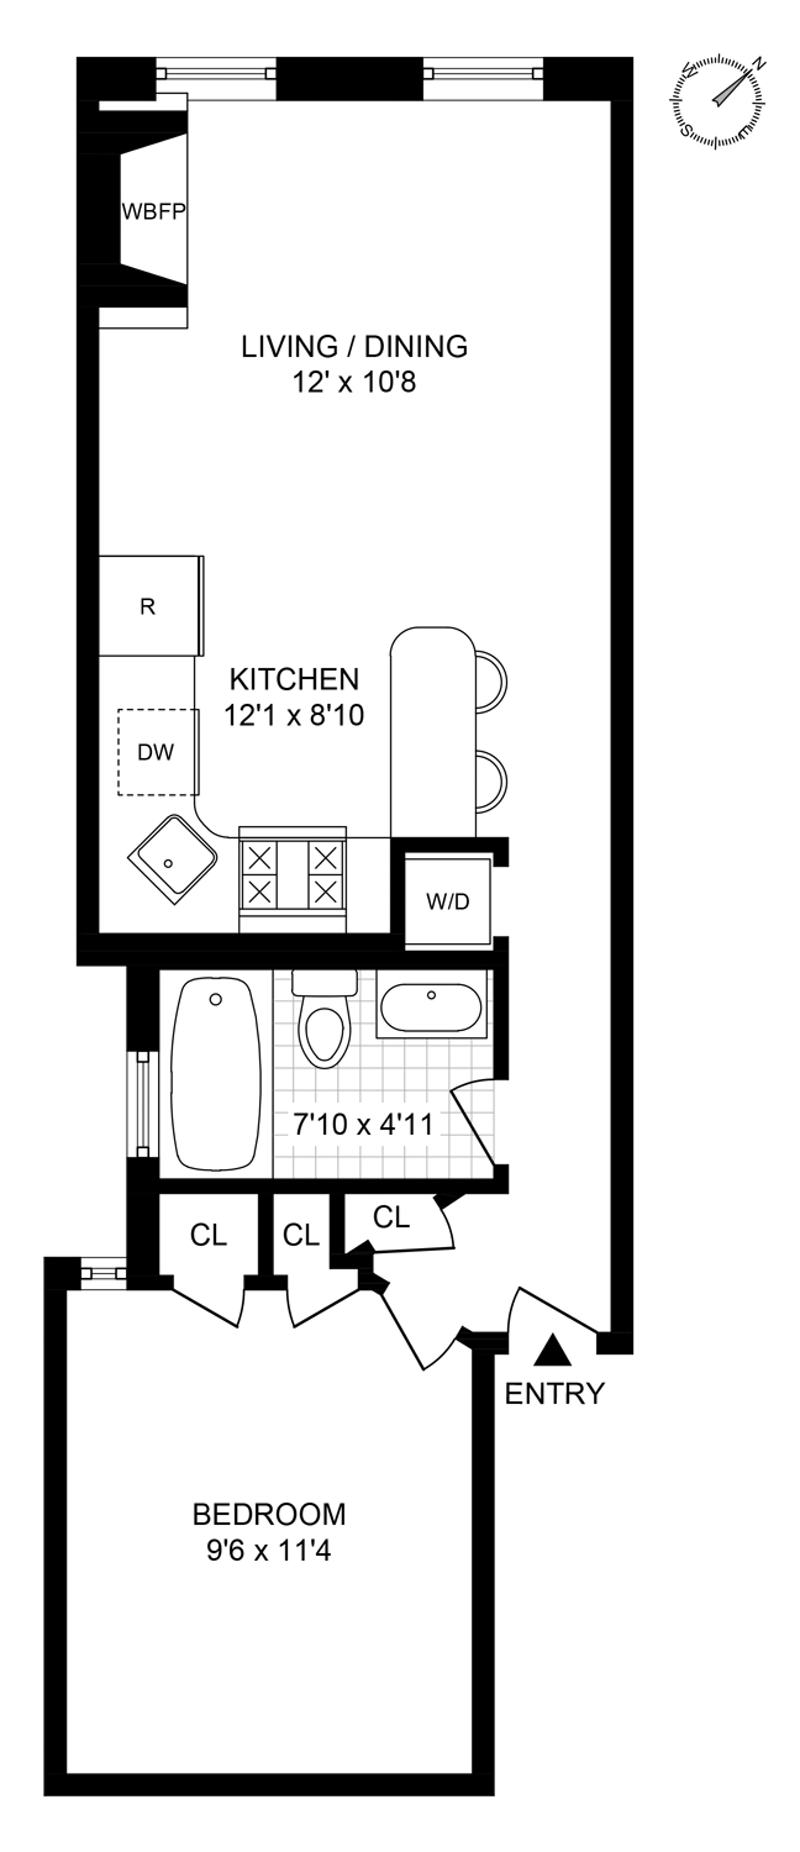 Floorplan for 160 Fifth Avenue, 2LR